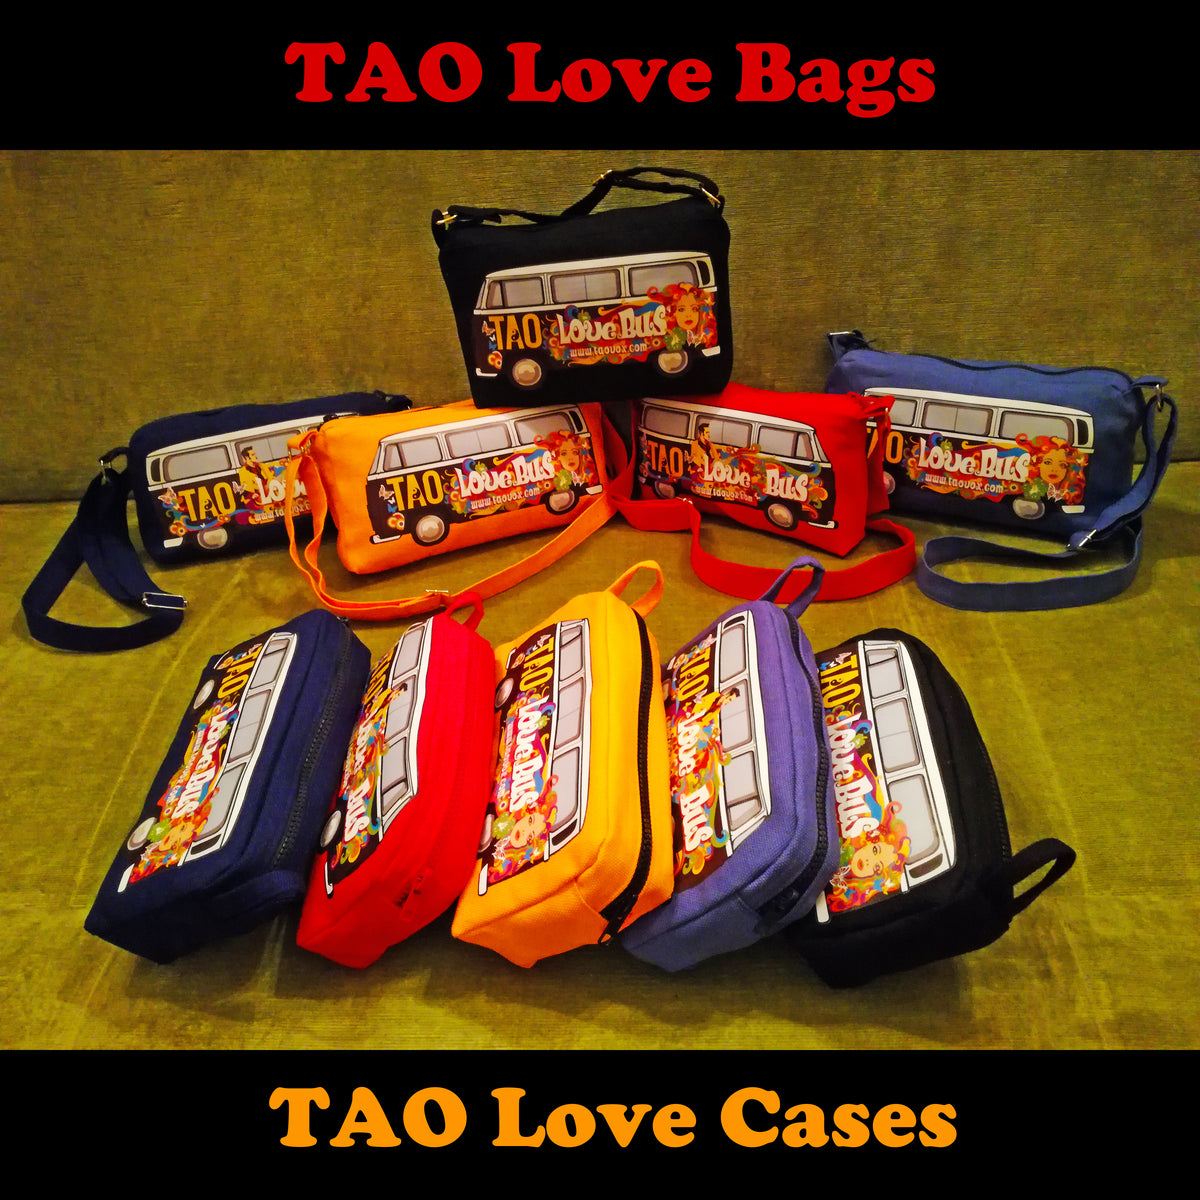 TAO LOVE CASE